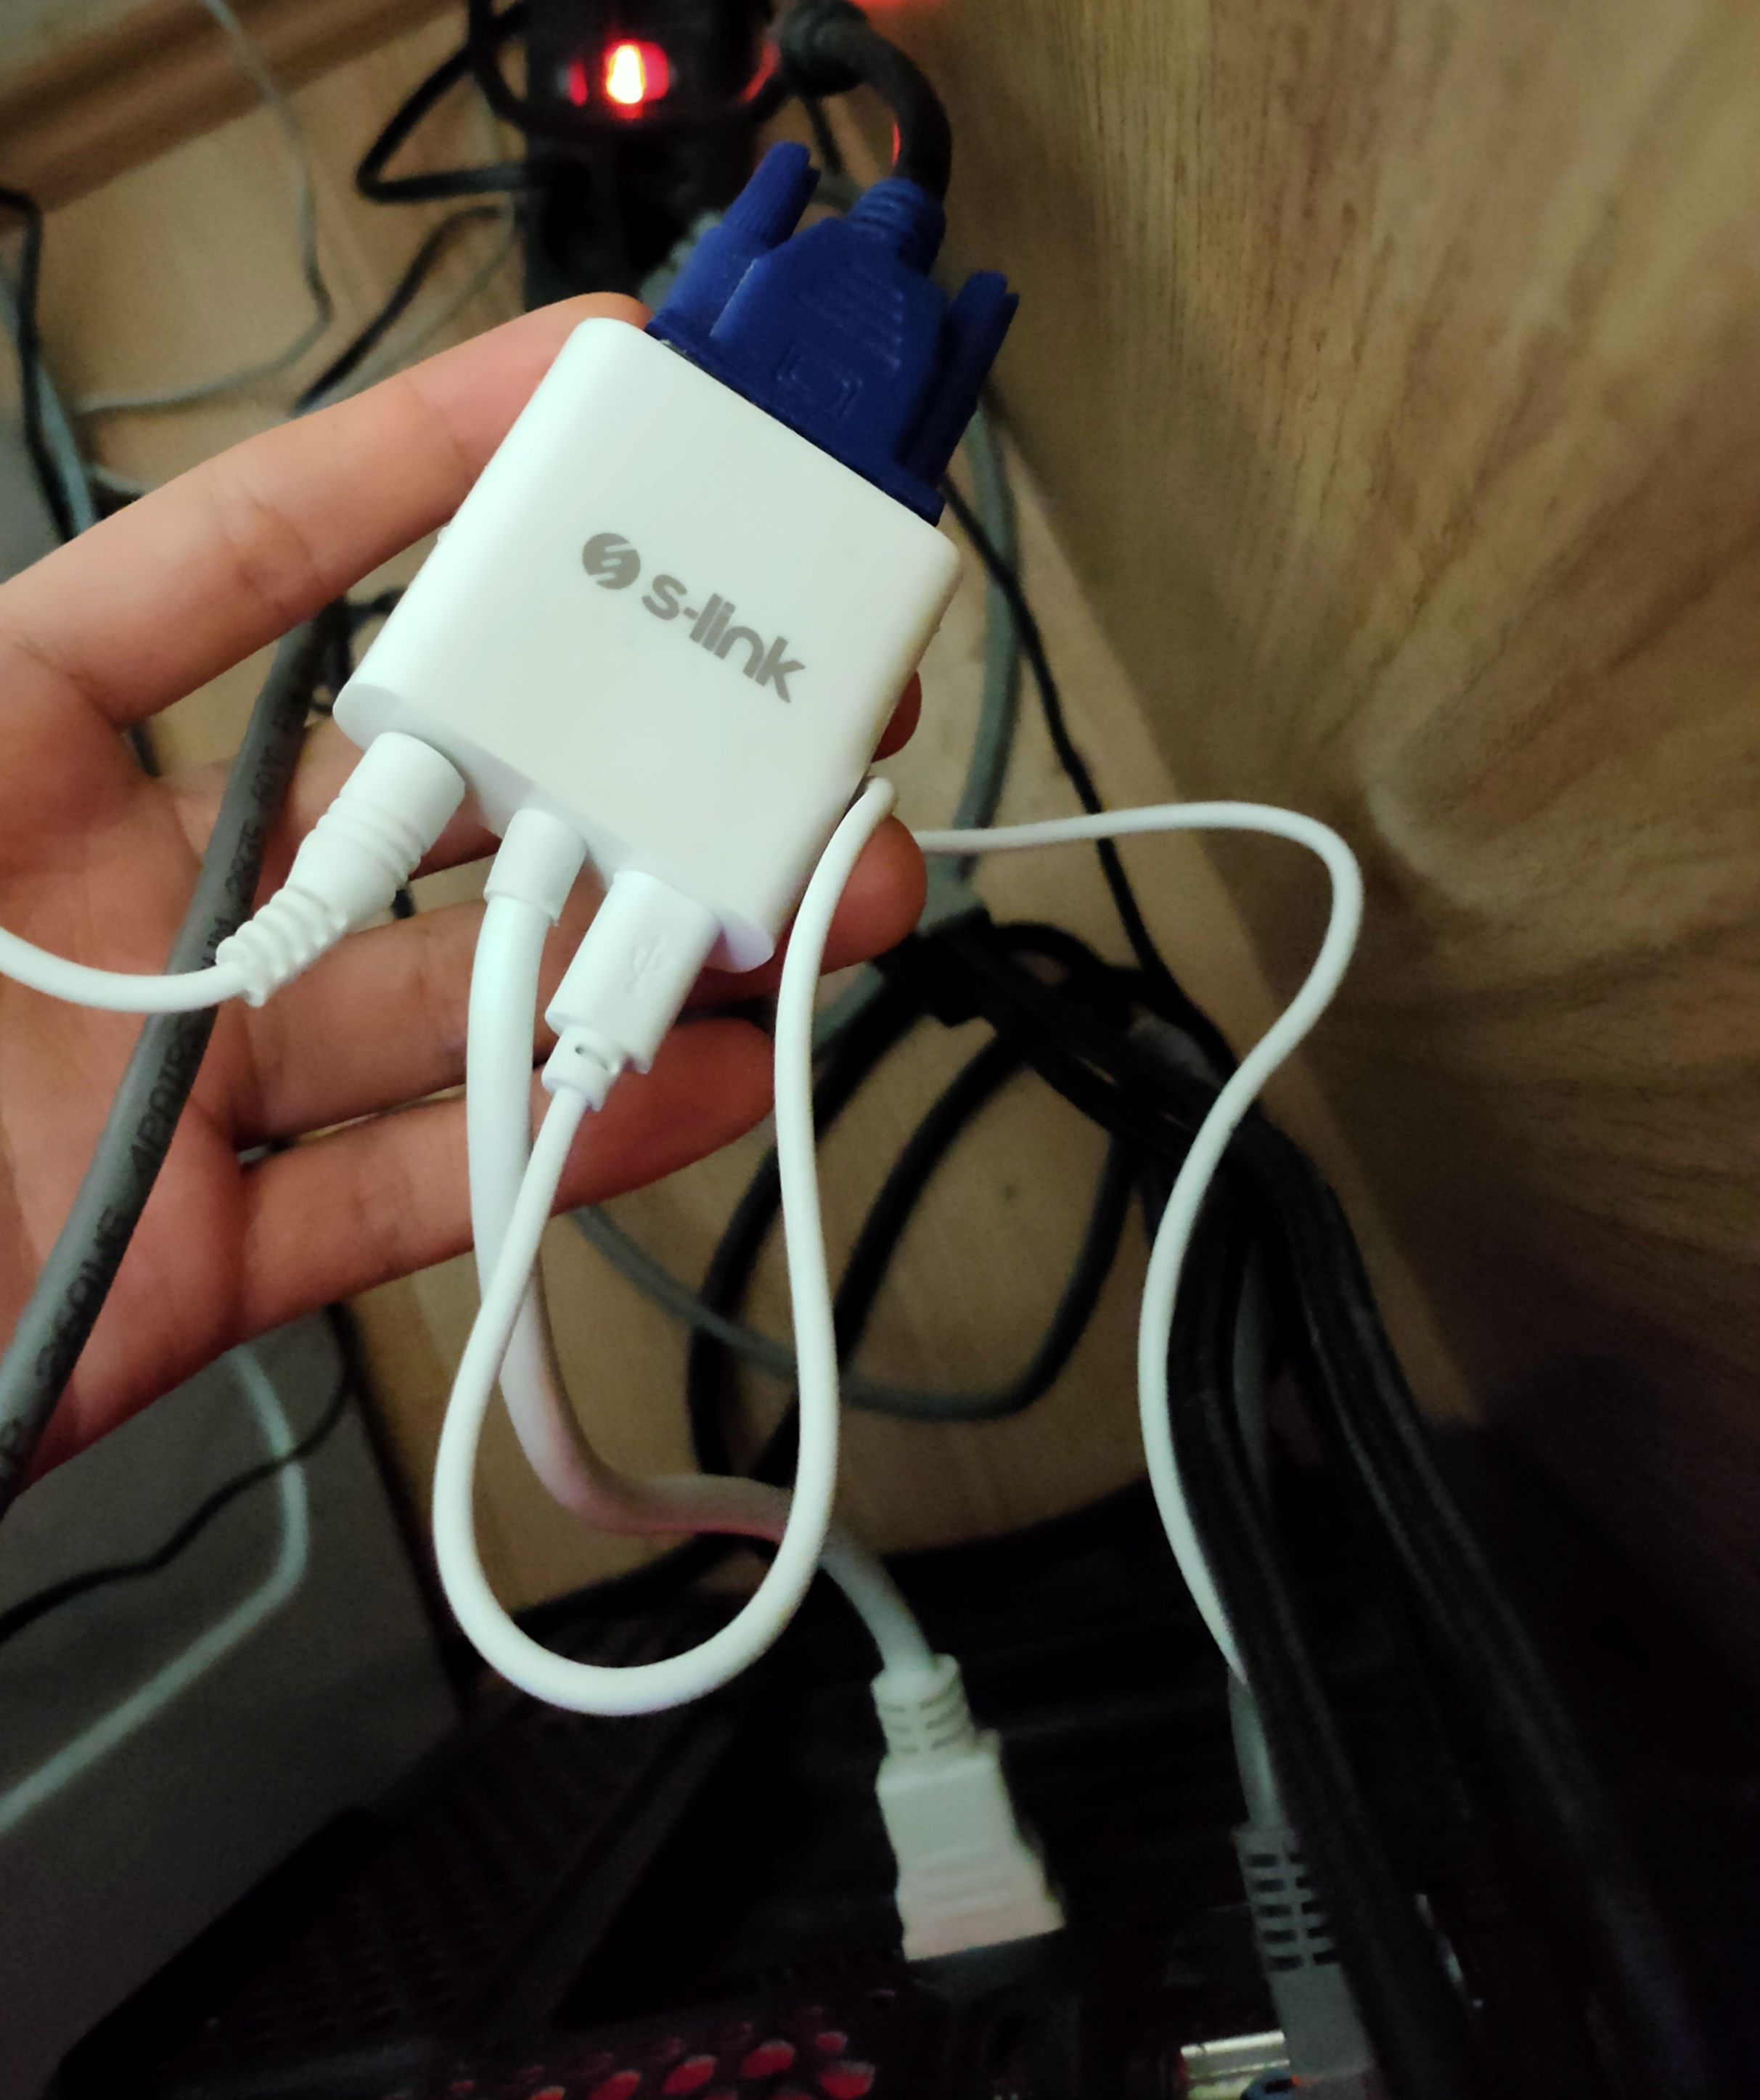 HDMI to VGA kablo tamir edilir mi? | Technopat Sosyal